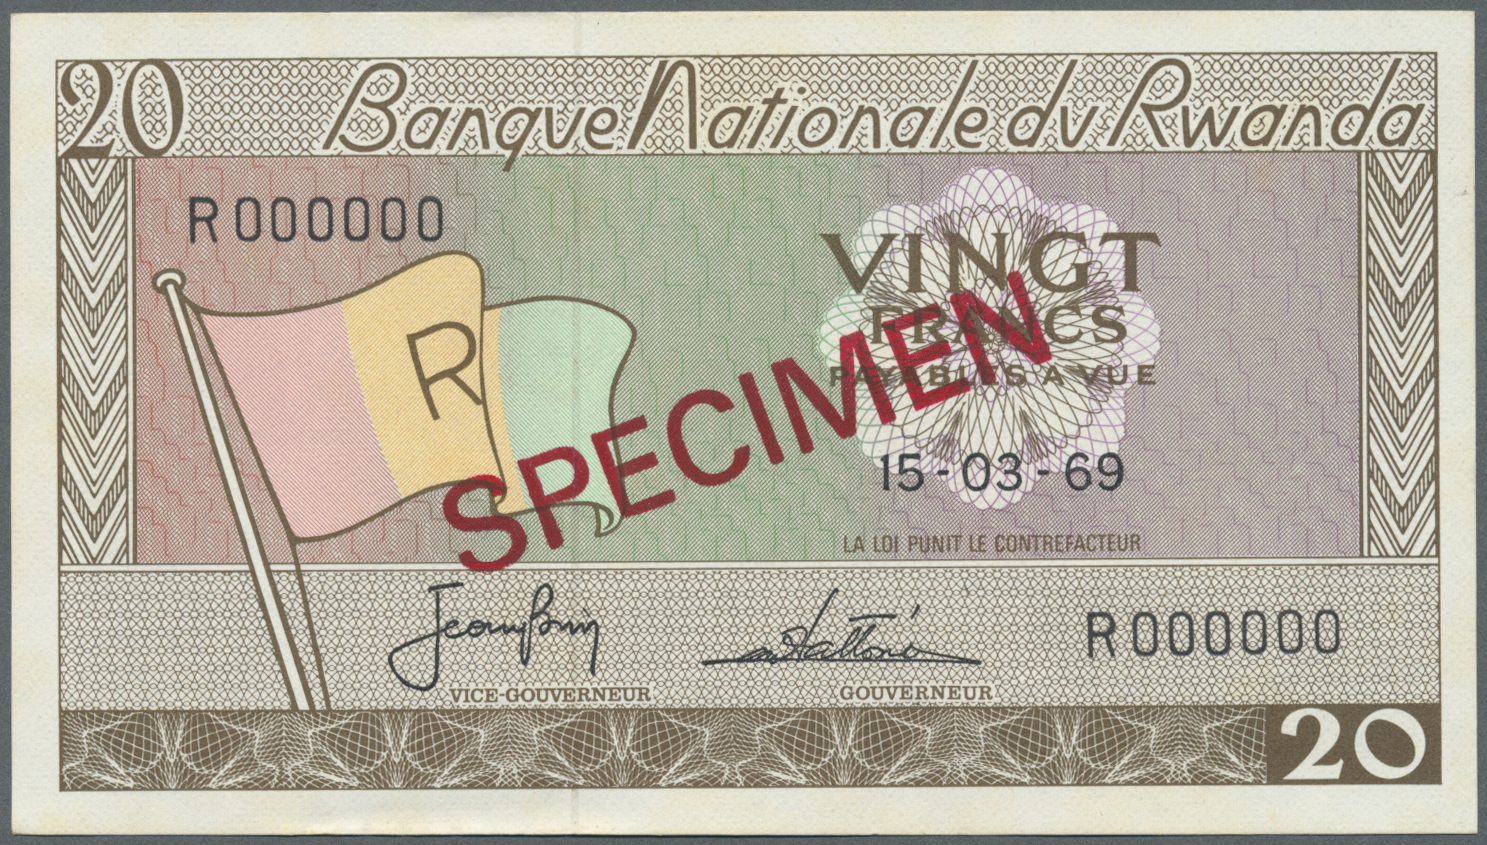 02824 Rwanda / Ruanda: Set Of 2 Specimen Notes Of 20 Francs 1969 & 1971 P. 6as, 6cs In Condition UNC And AUNC. (2 Pcs) - Rwanda